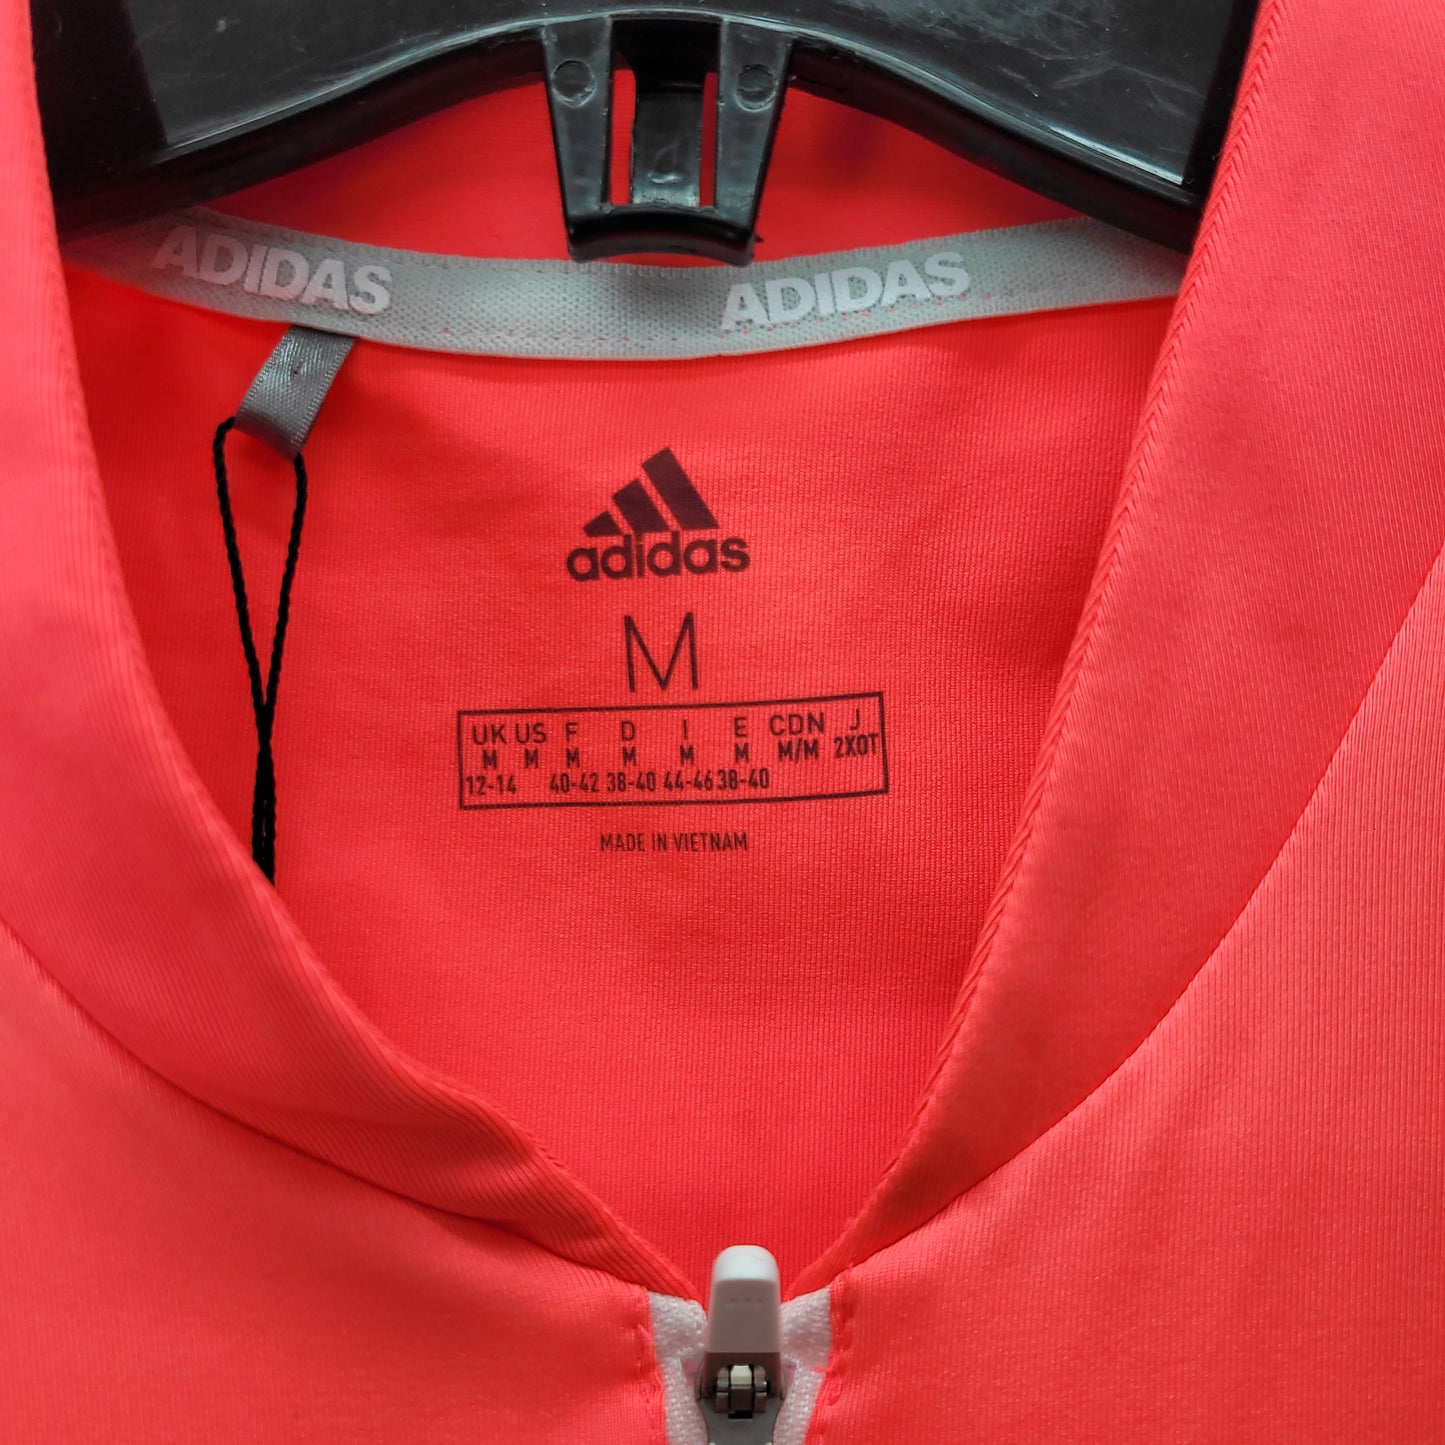 Adidas Women's Quarter Zip Tank Top Stripes Pink/White - Size Medium